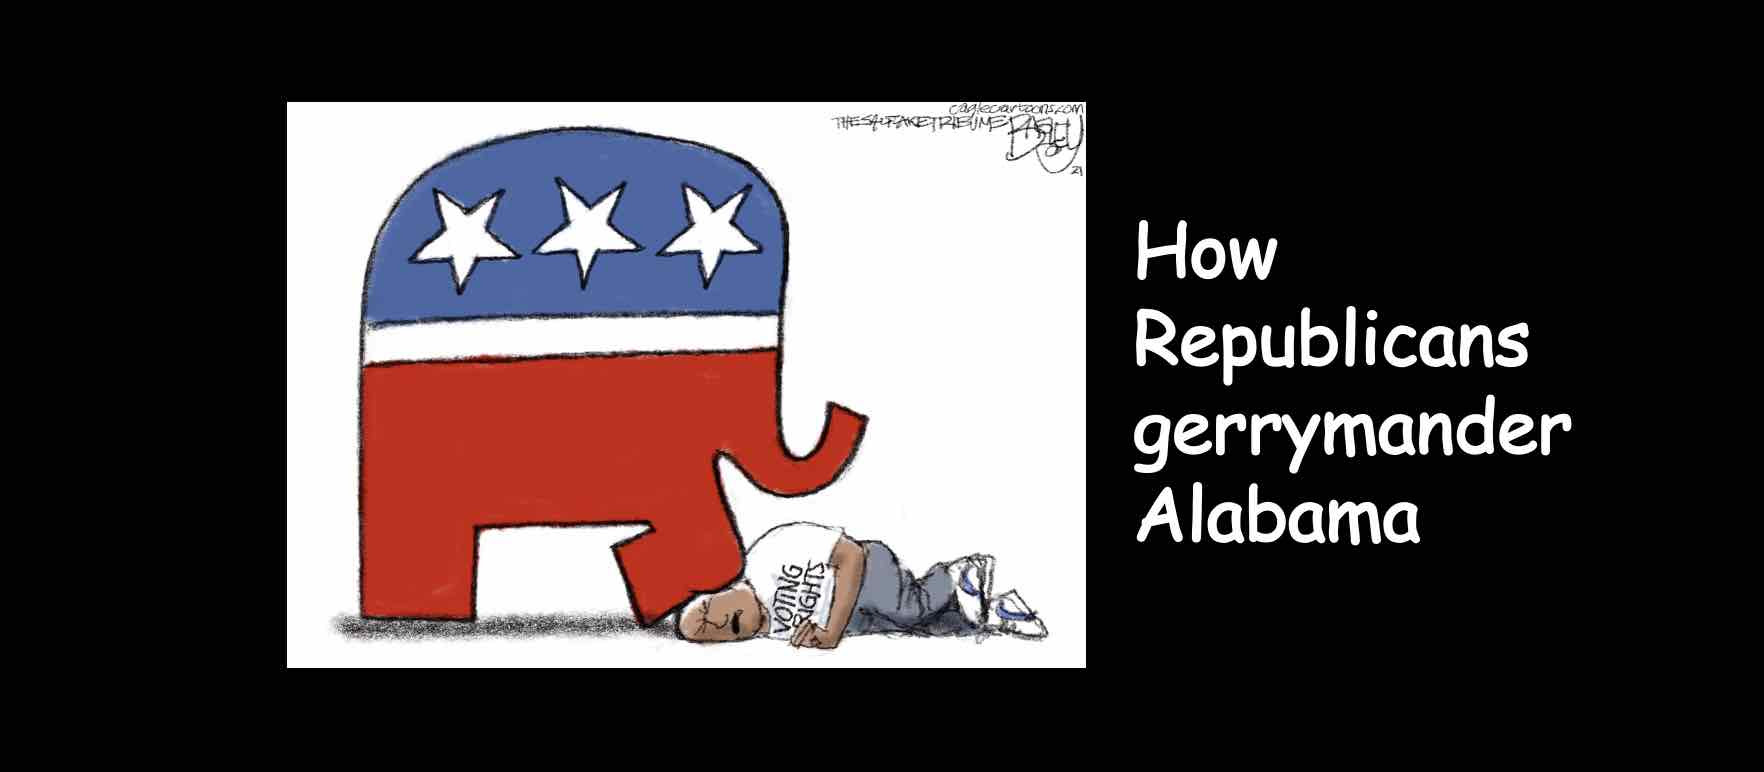 How Republicans gerrymander Alabama made simple